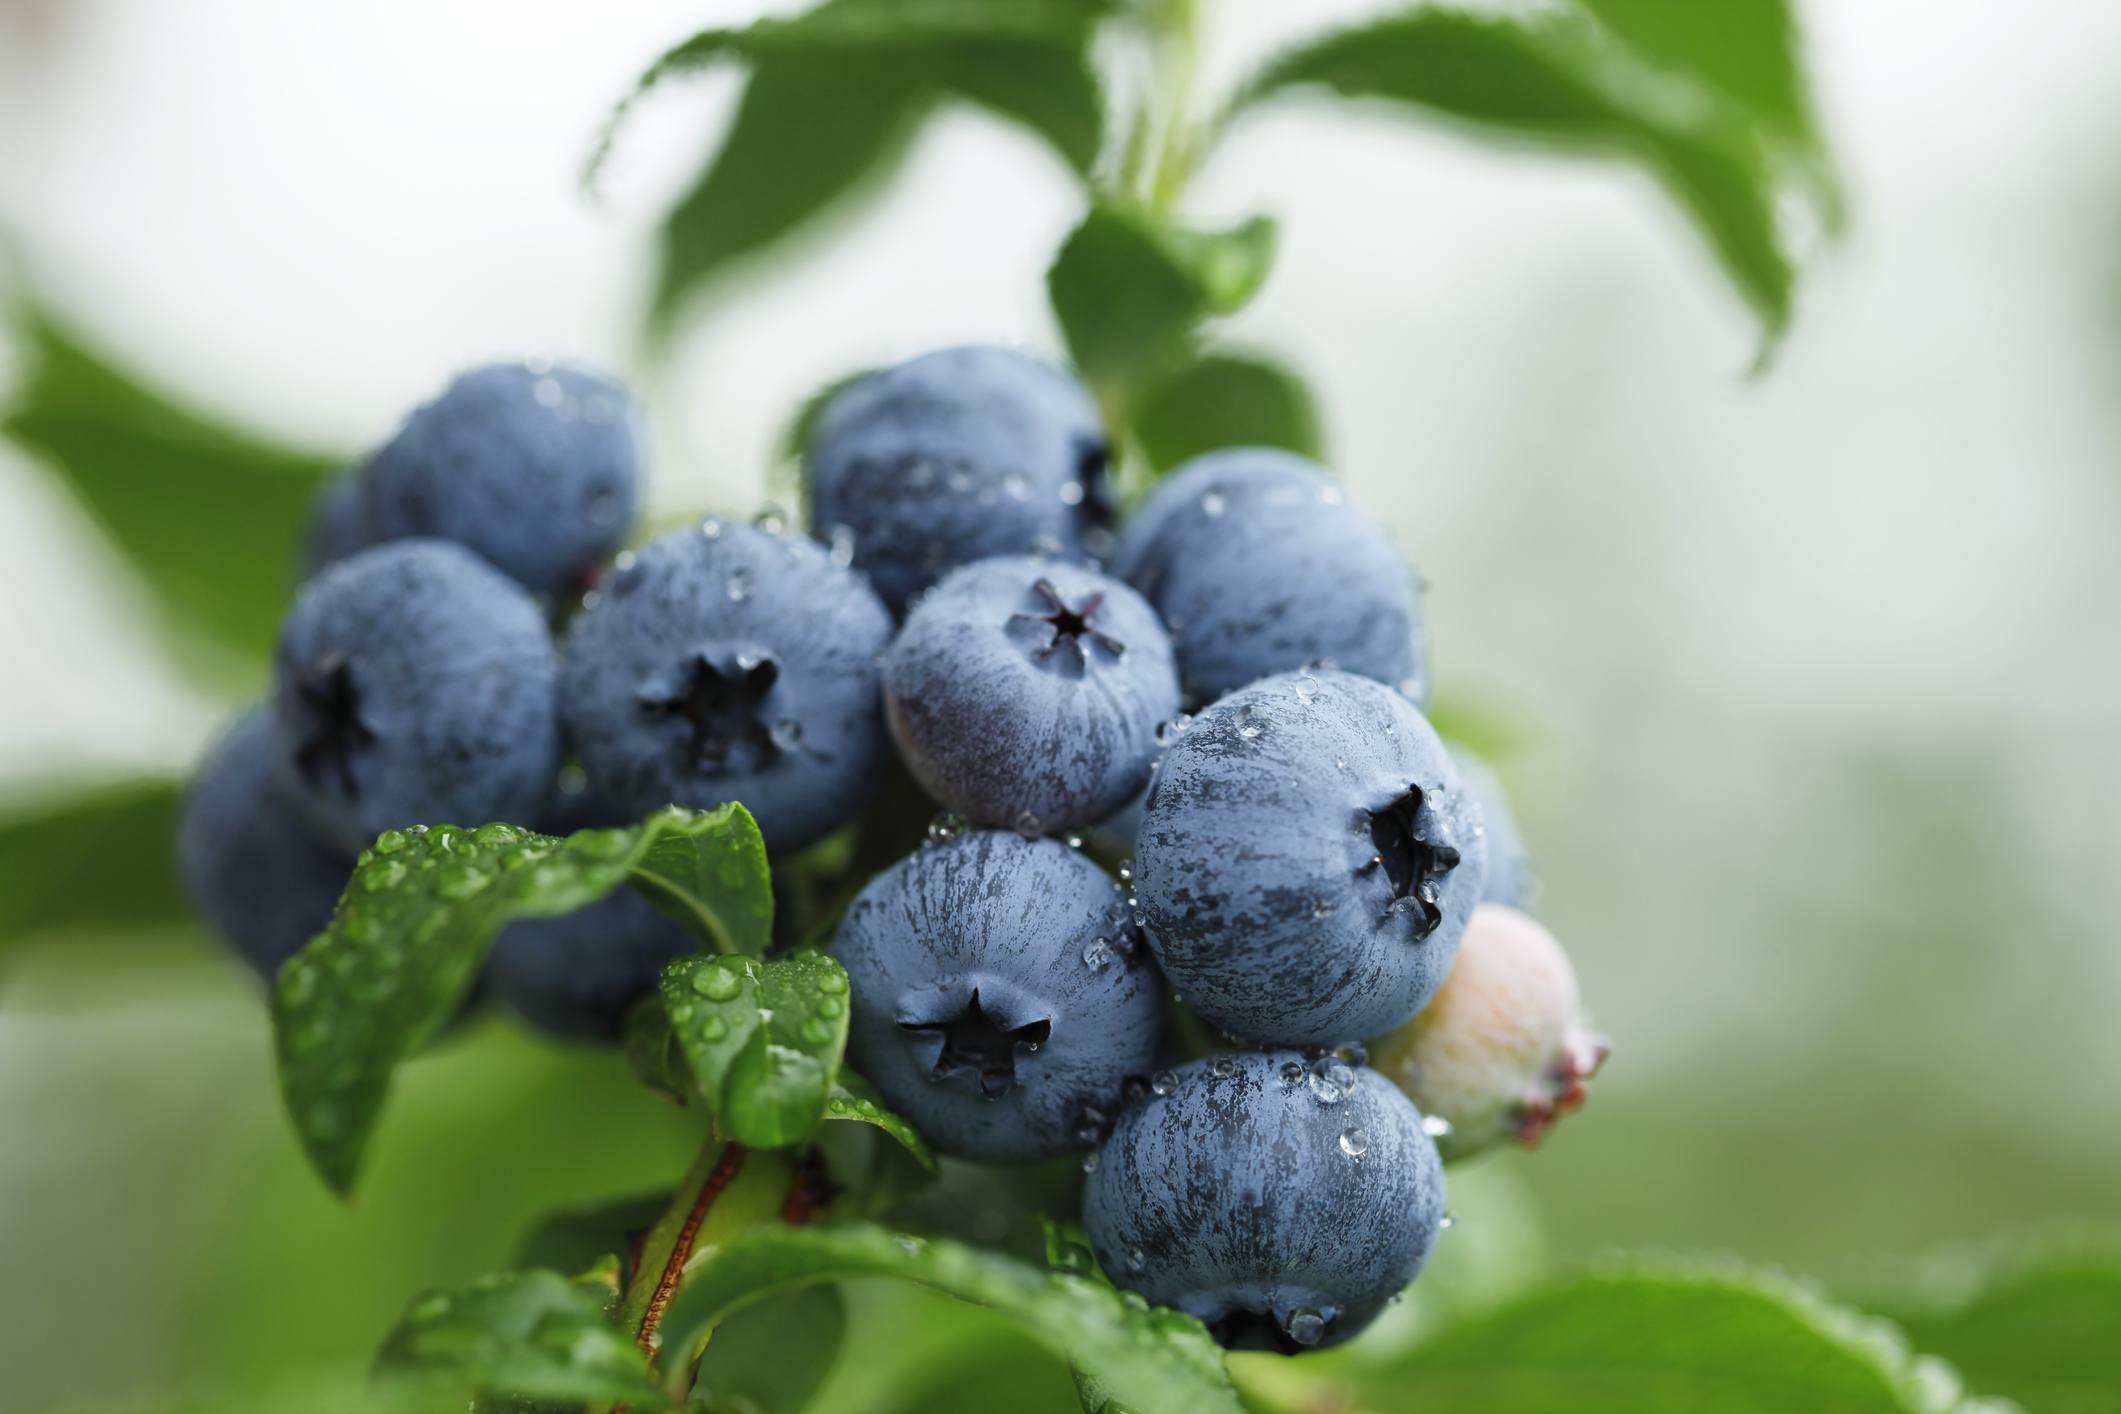 Real Southern highbush blueberry